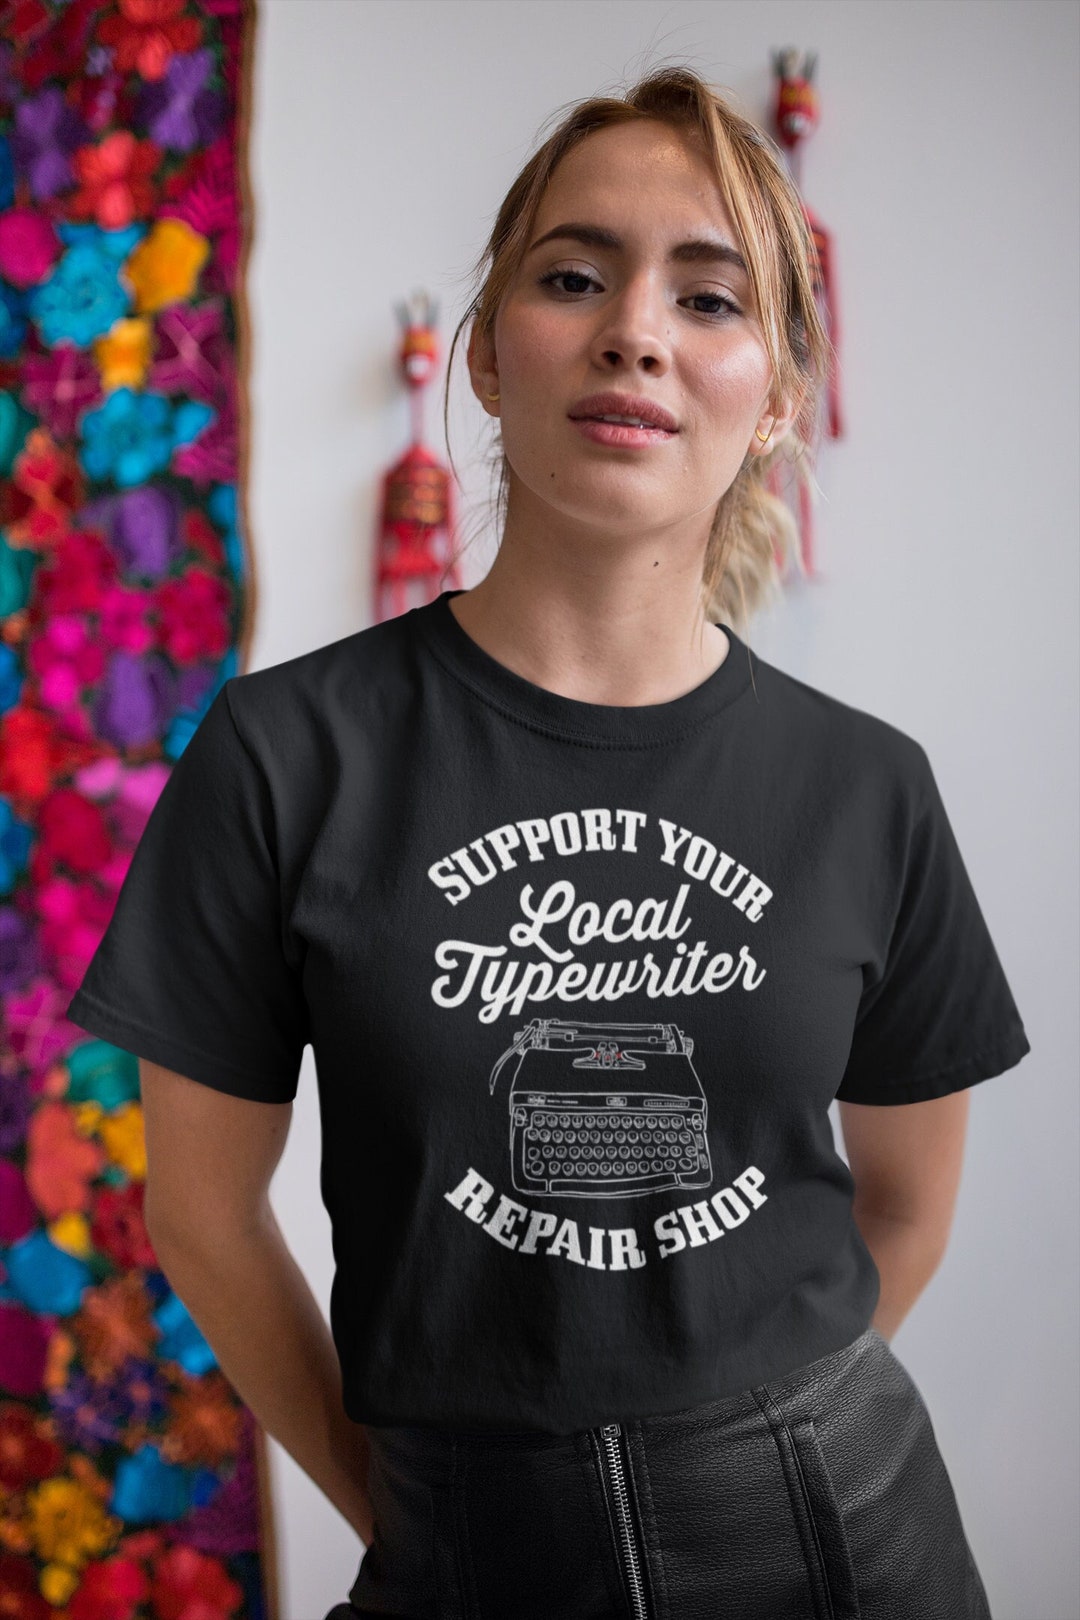 Typewriter Vintage T Shirt, Support Your Local Typewriter